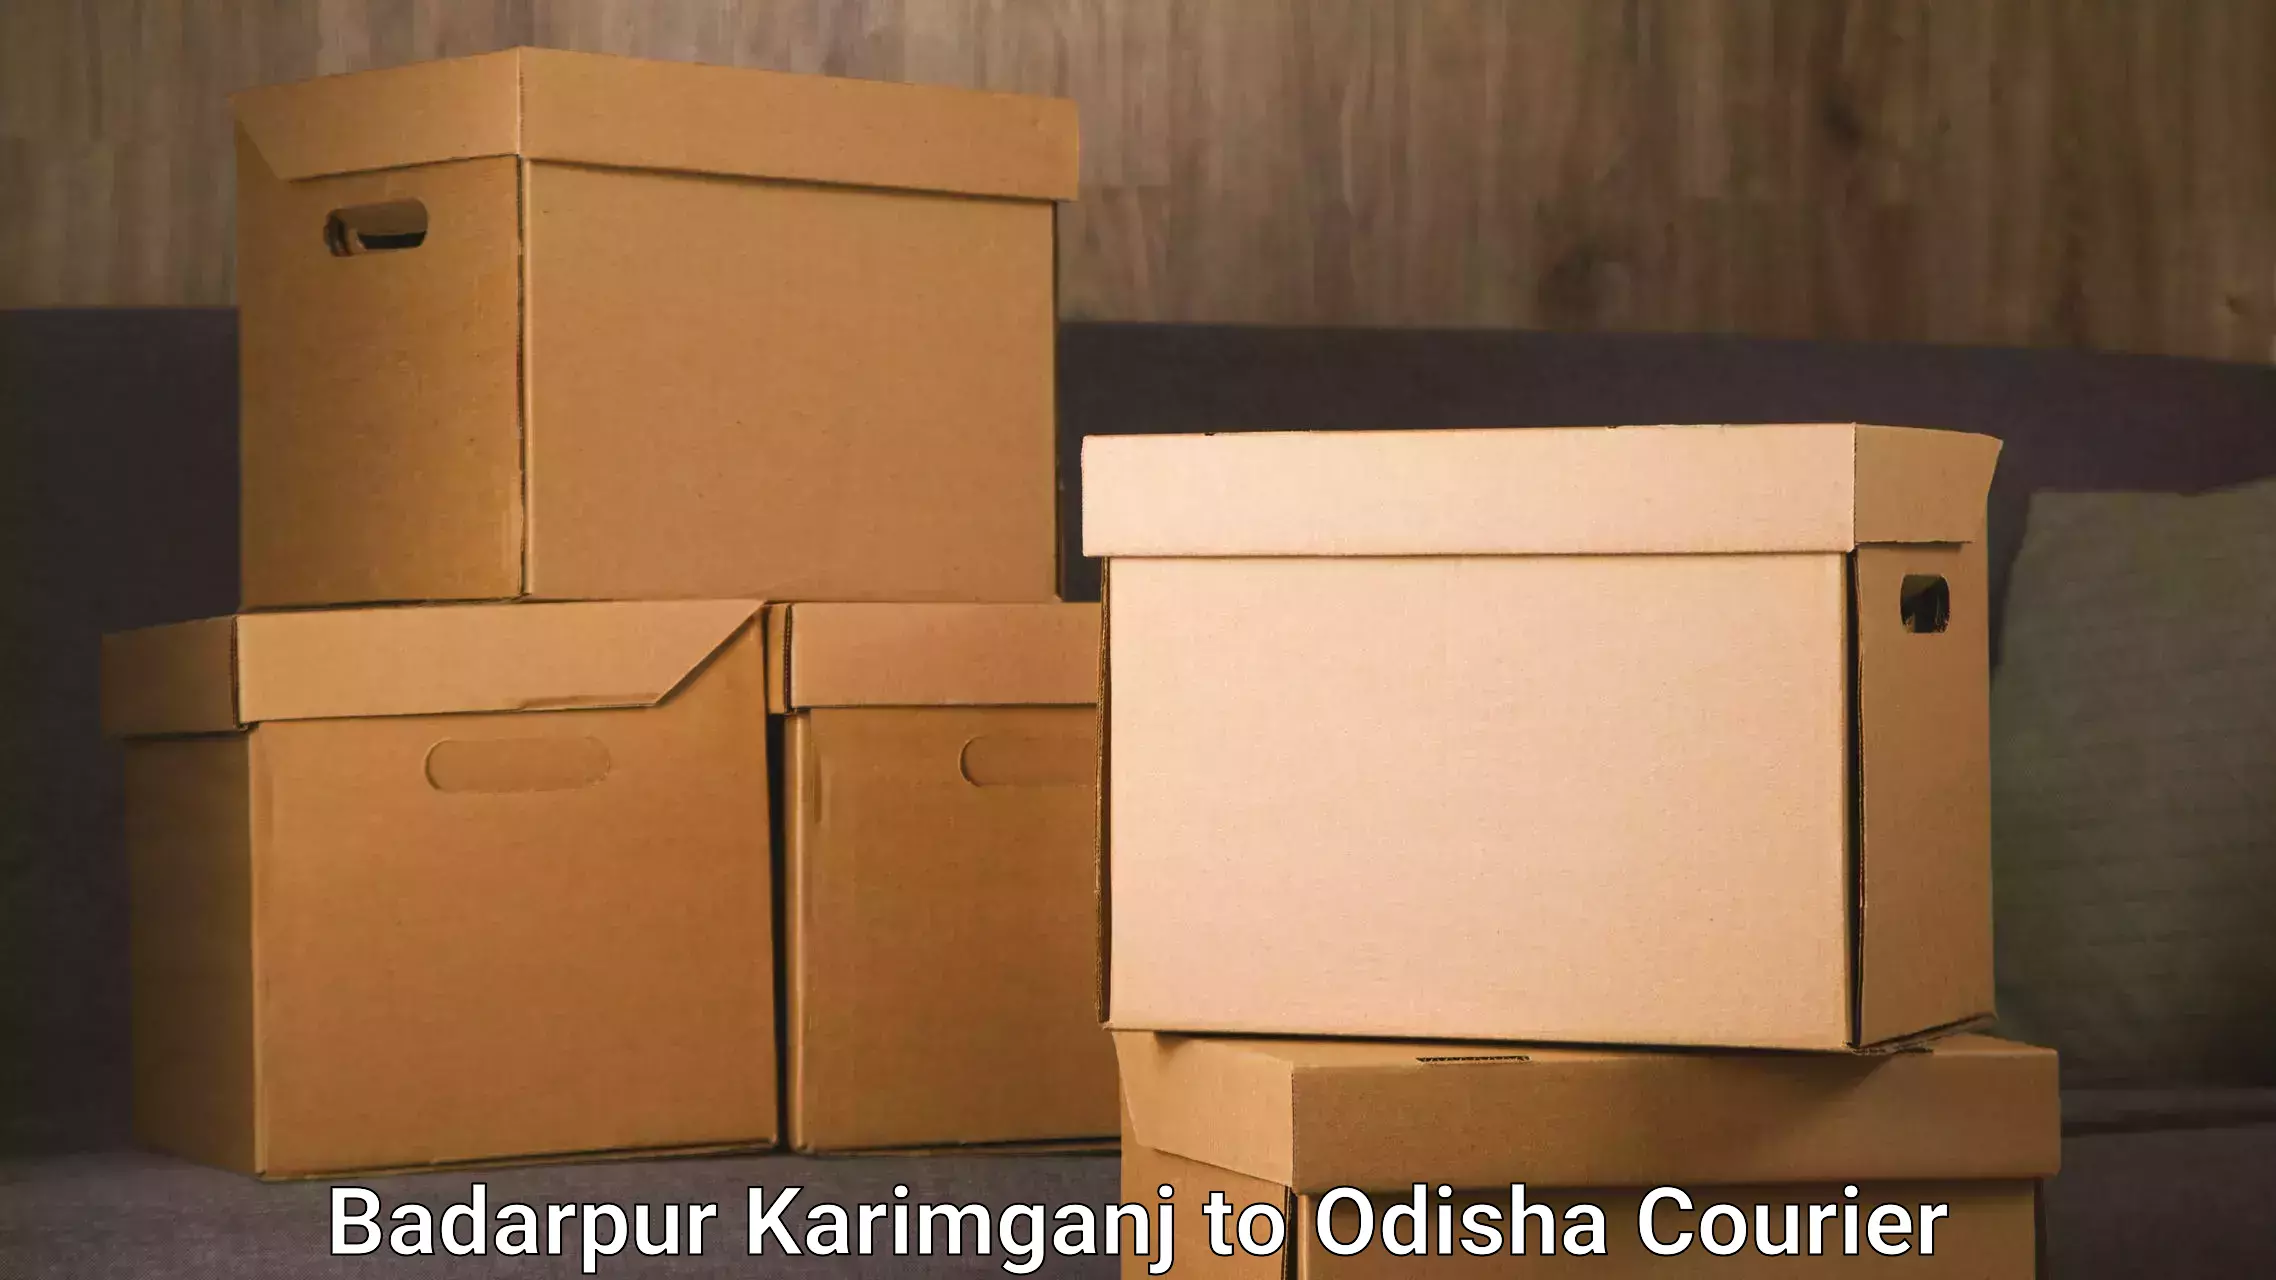 Logistics service provider Badarpur Karimganj to Agarpada